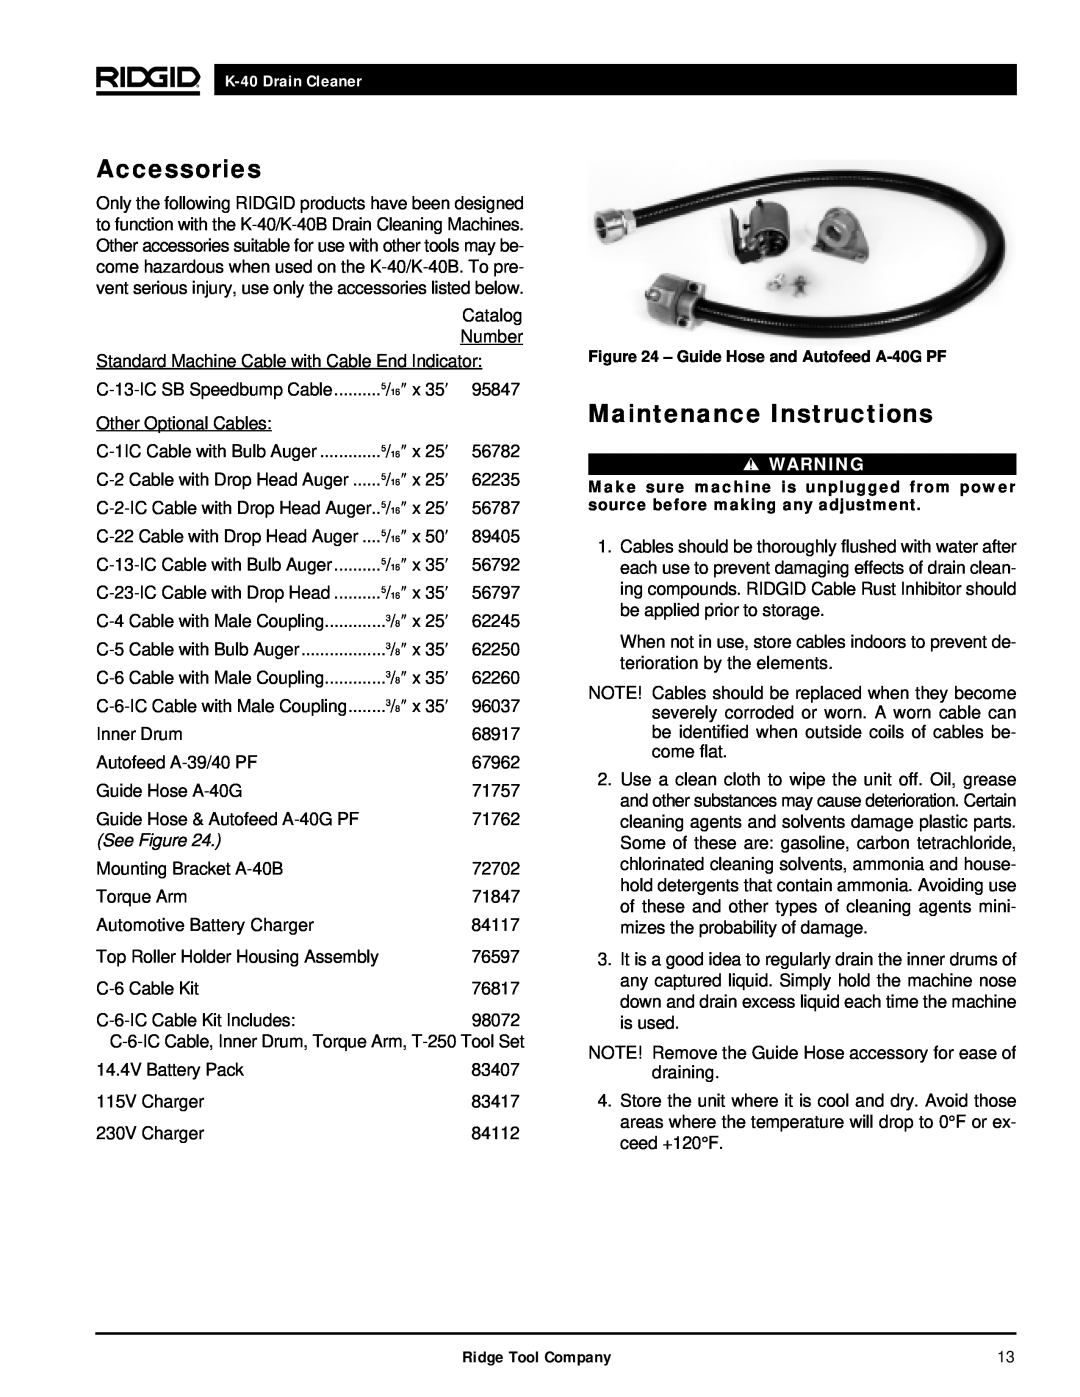 RIDGID K-40B, K-40G PF manual Accessories, Maintenance Instructions, K-40Drain Cleaner, Ridge Tool Company 